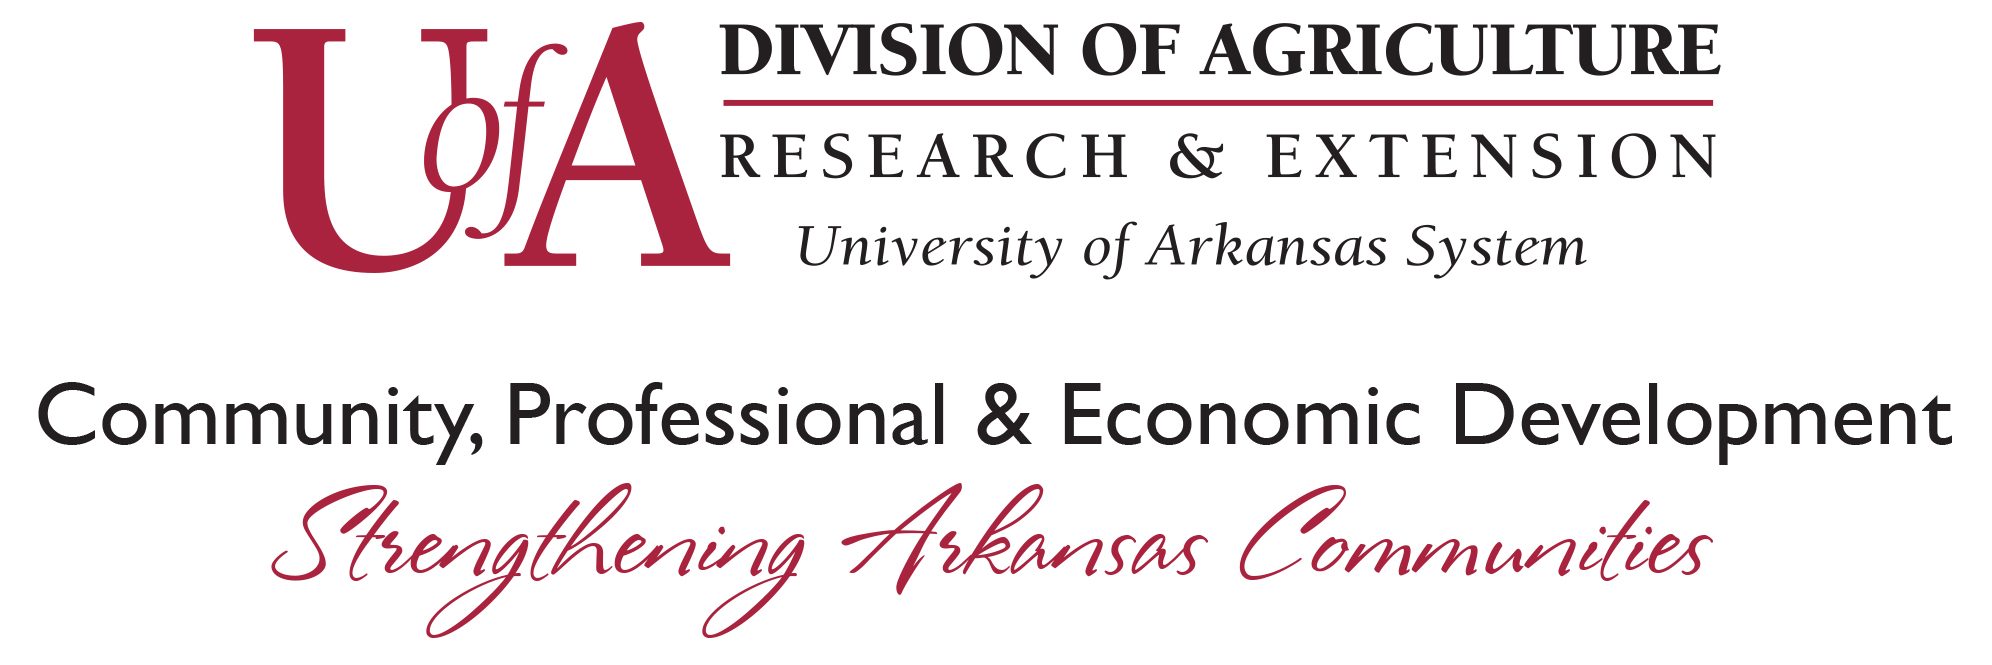 University of Arkansas System logo